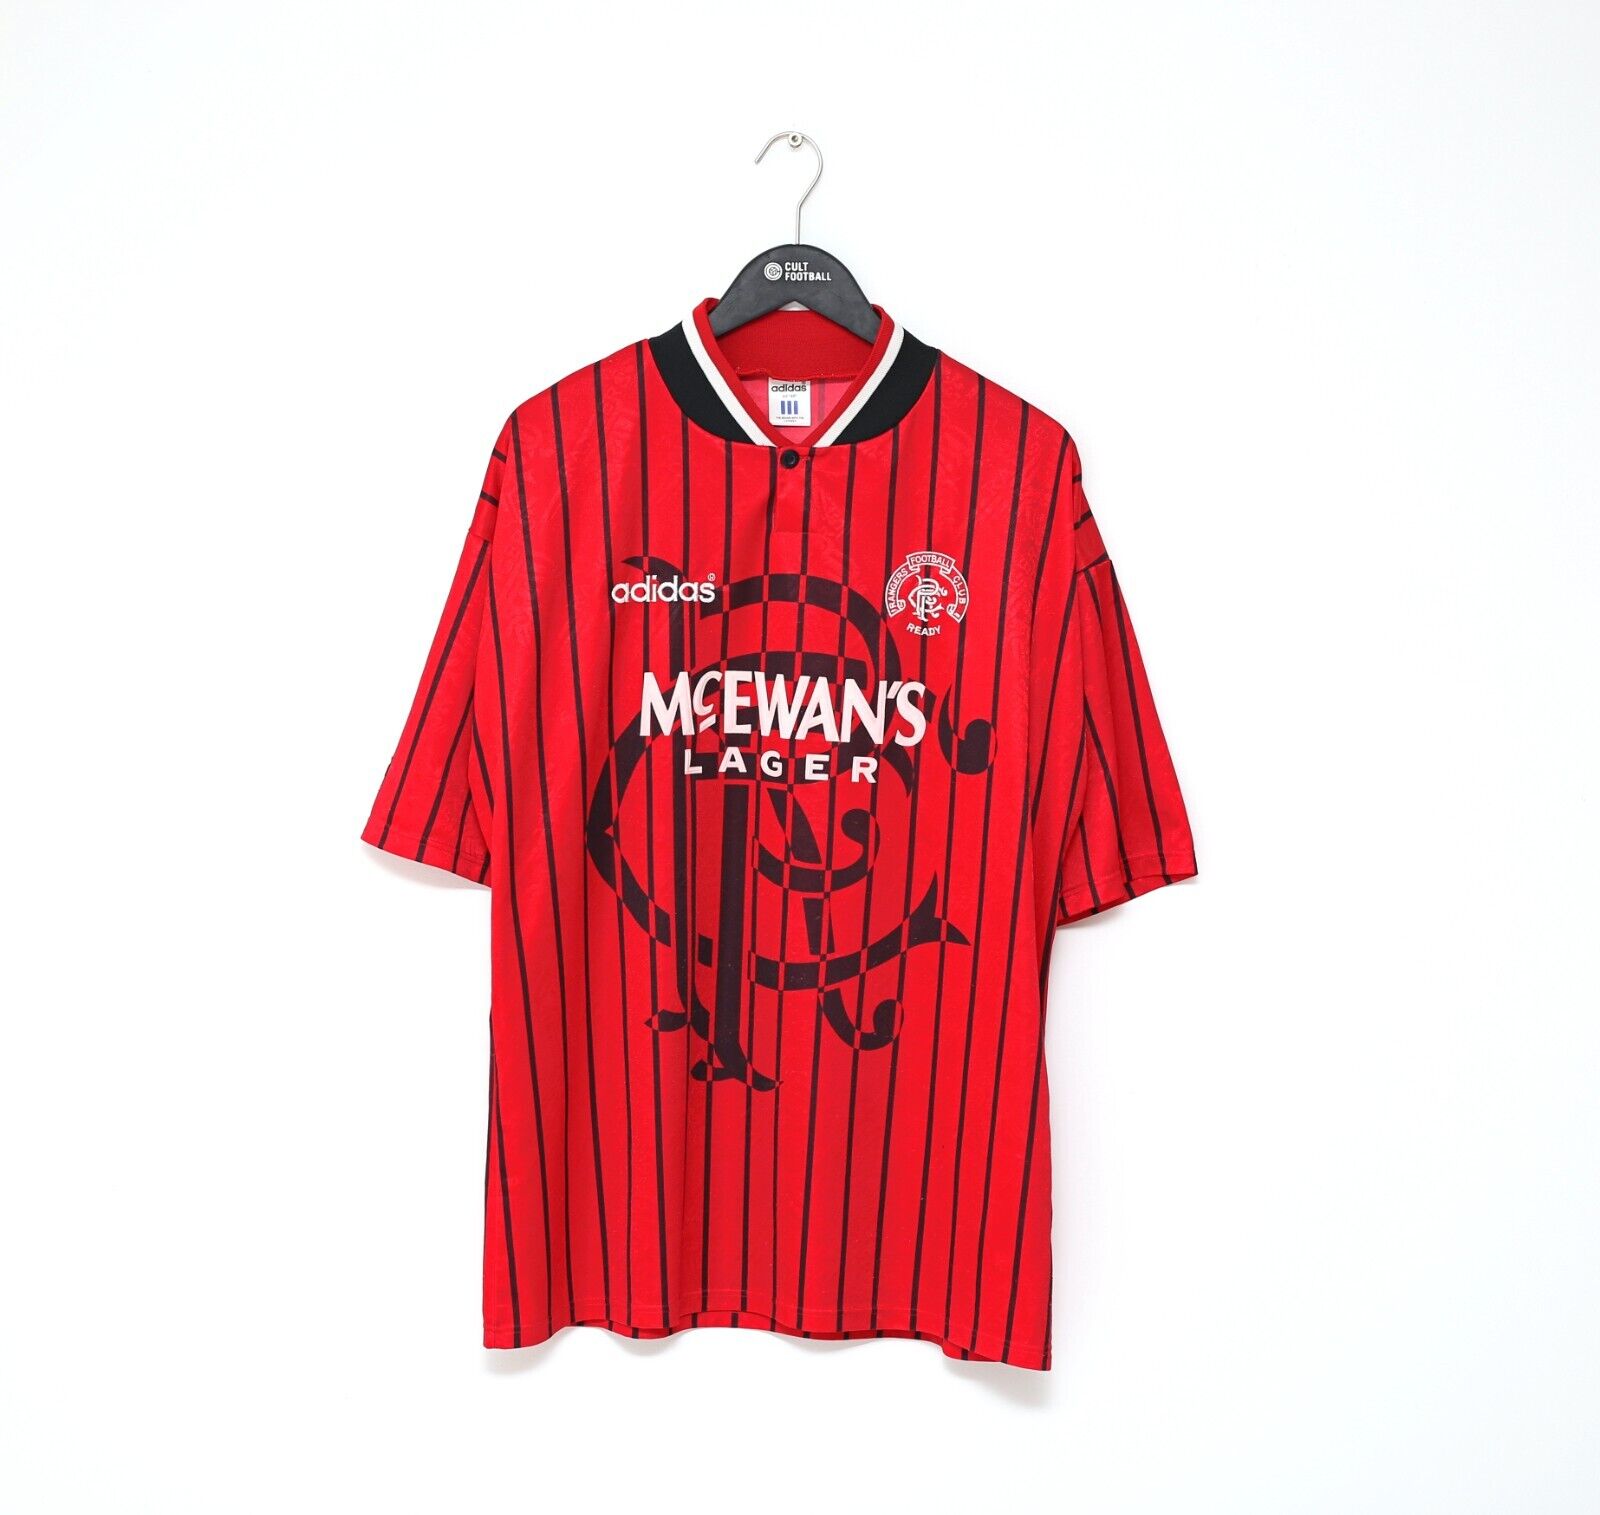 Rangers Third football shirt 1994 - 1995. Sponsored by McEwan's